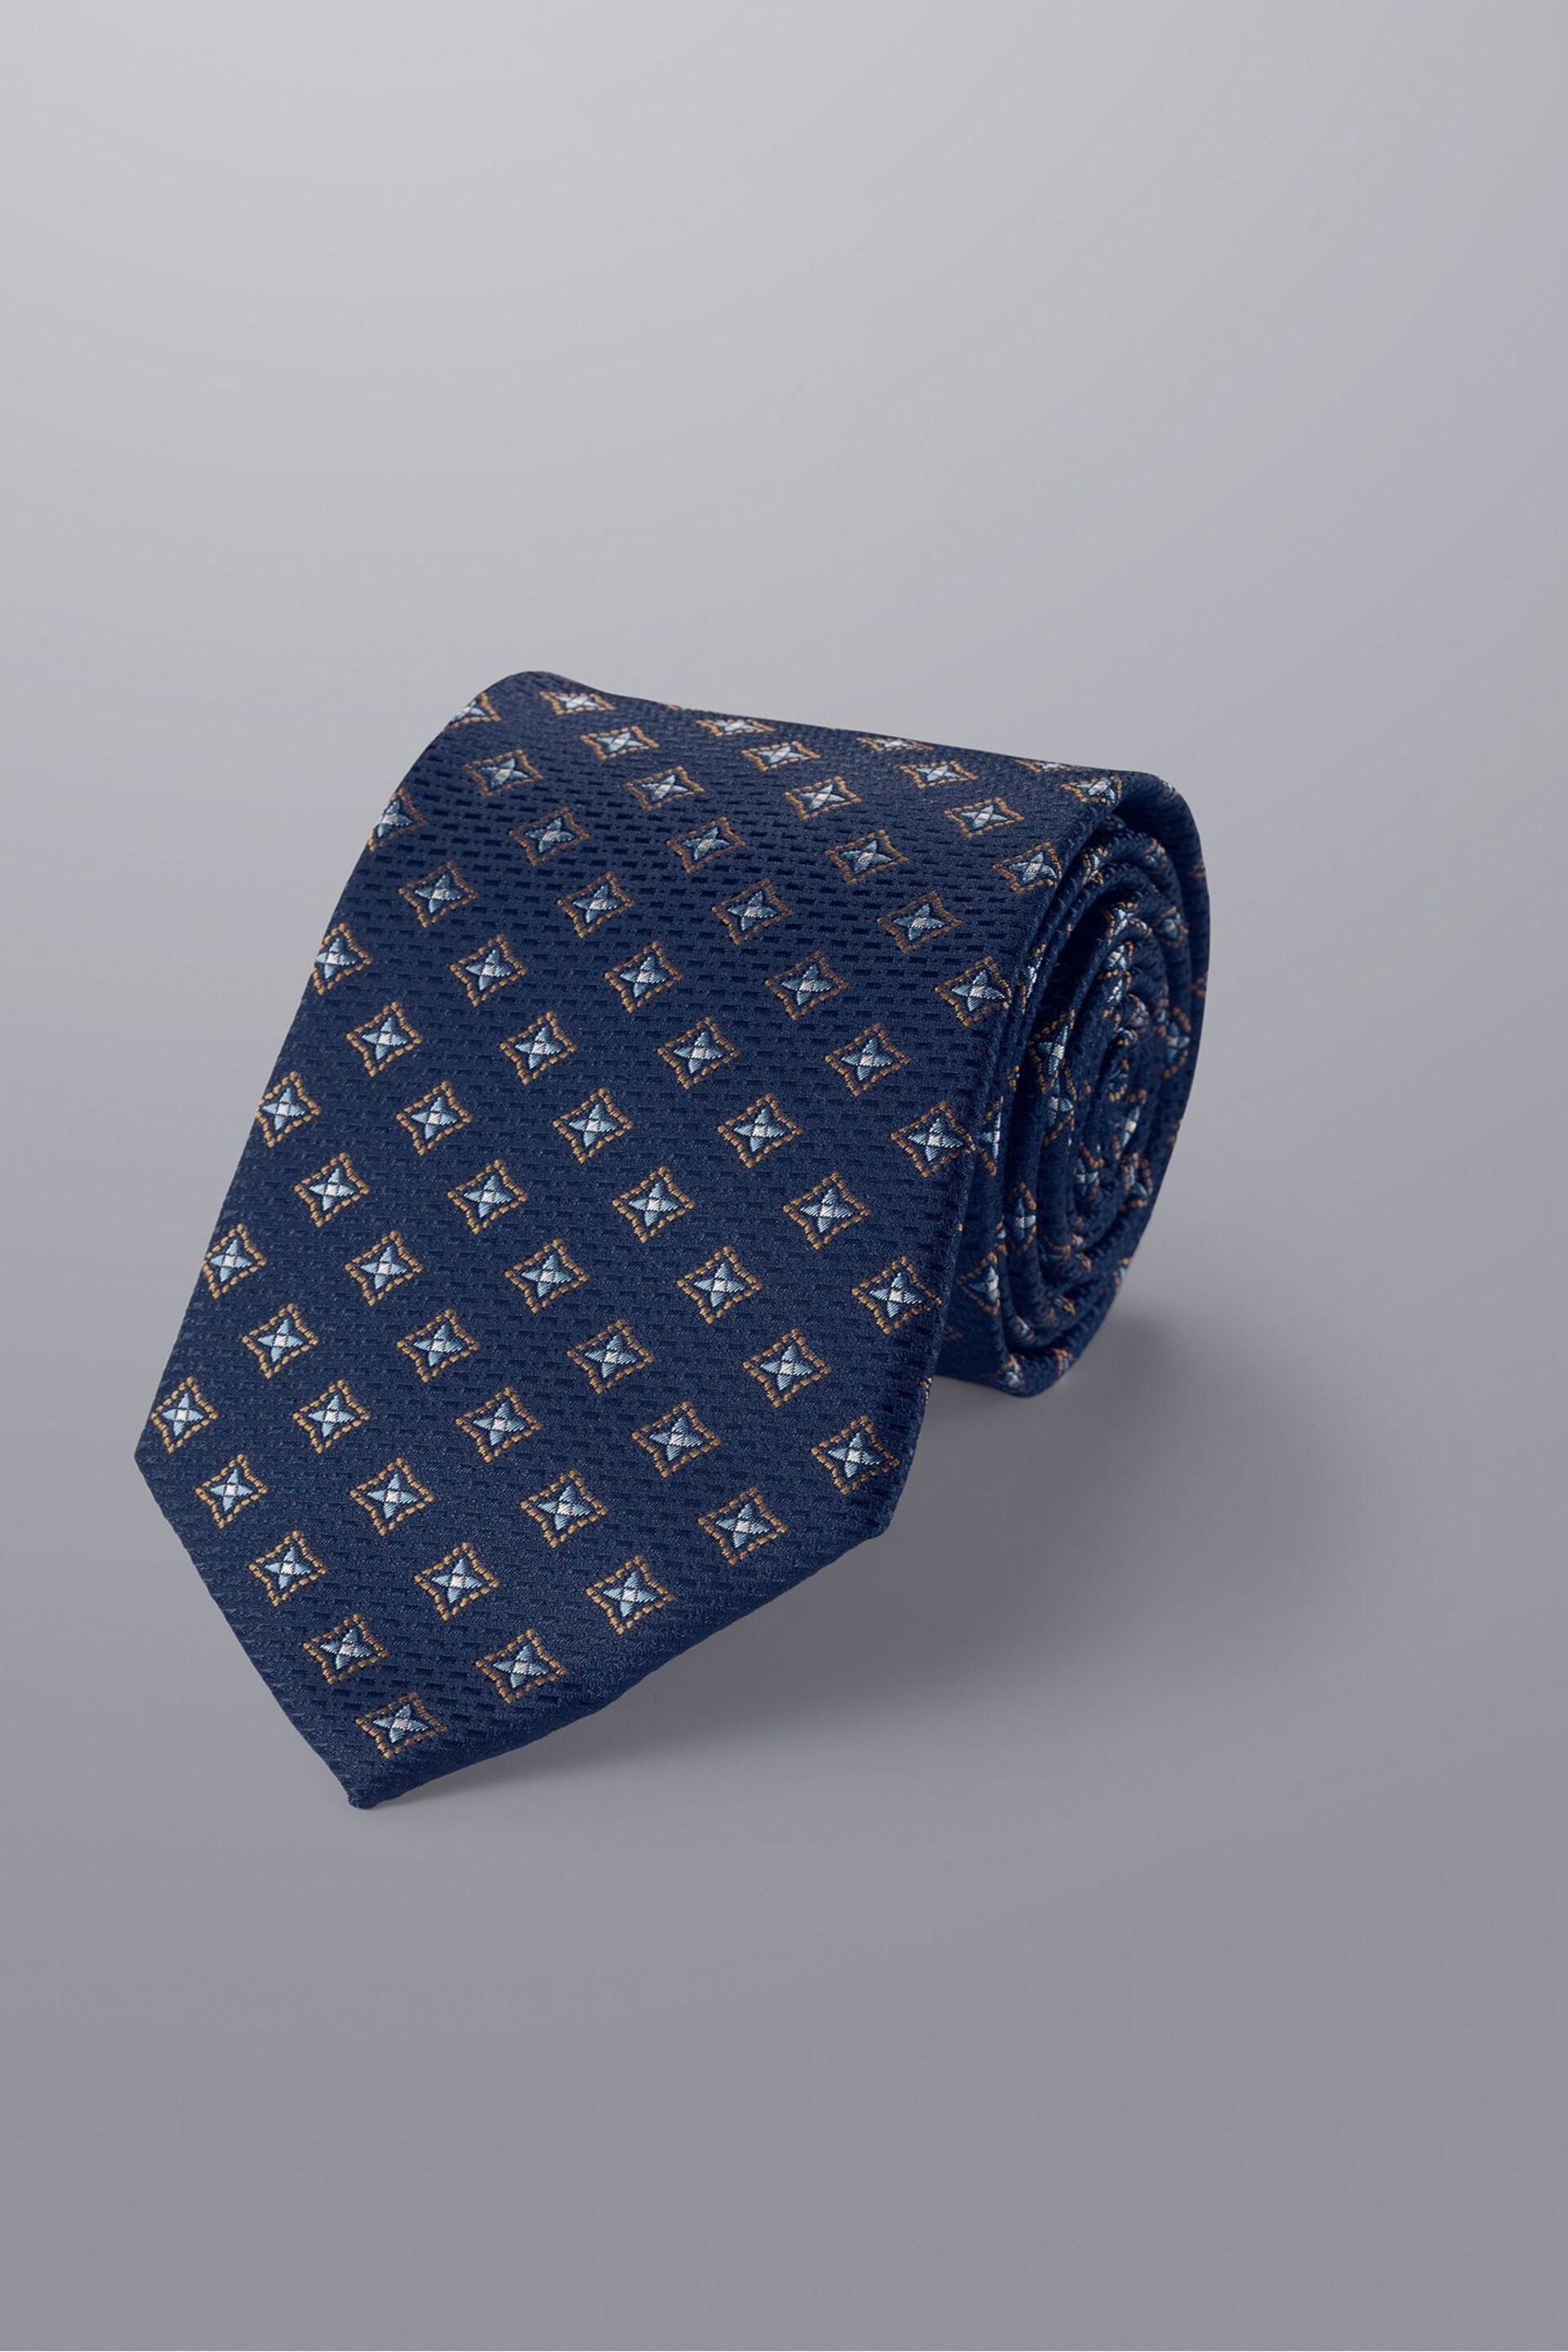 Charles Tyrwhitt Silver Blue Medallion Silk Stain Resistant Pattern Tie - Image 1 of 2